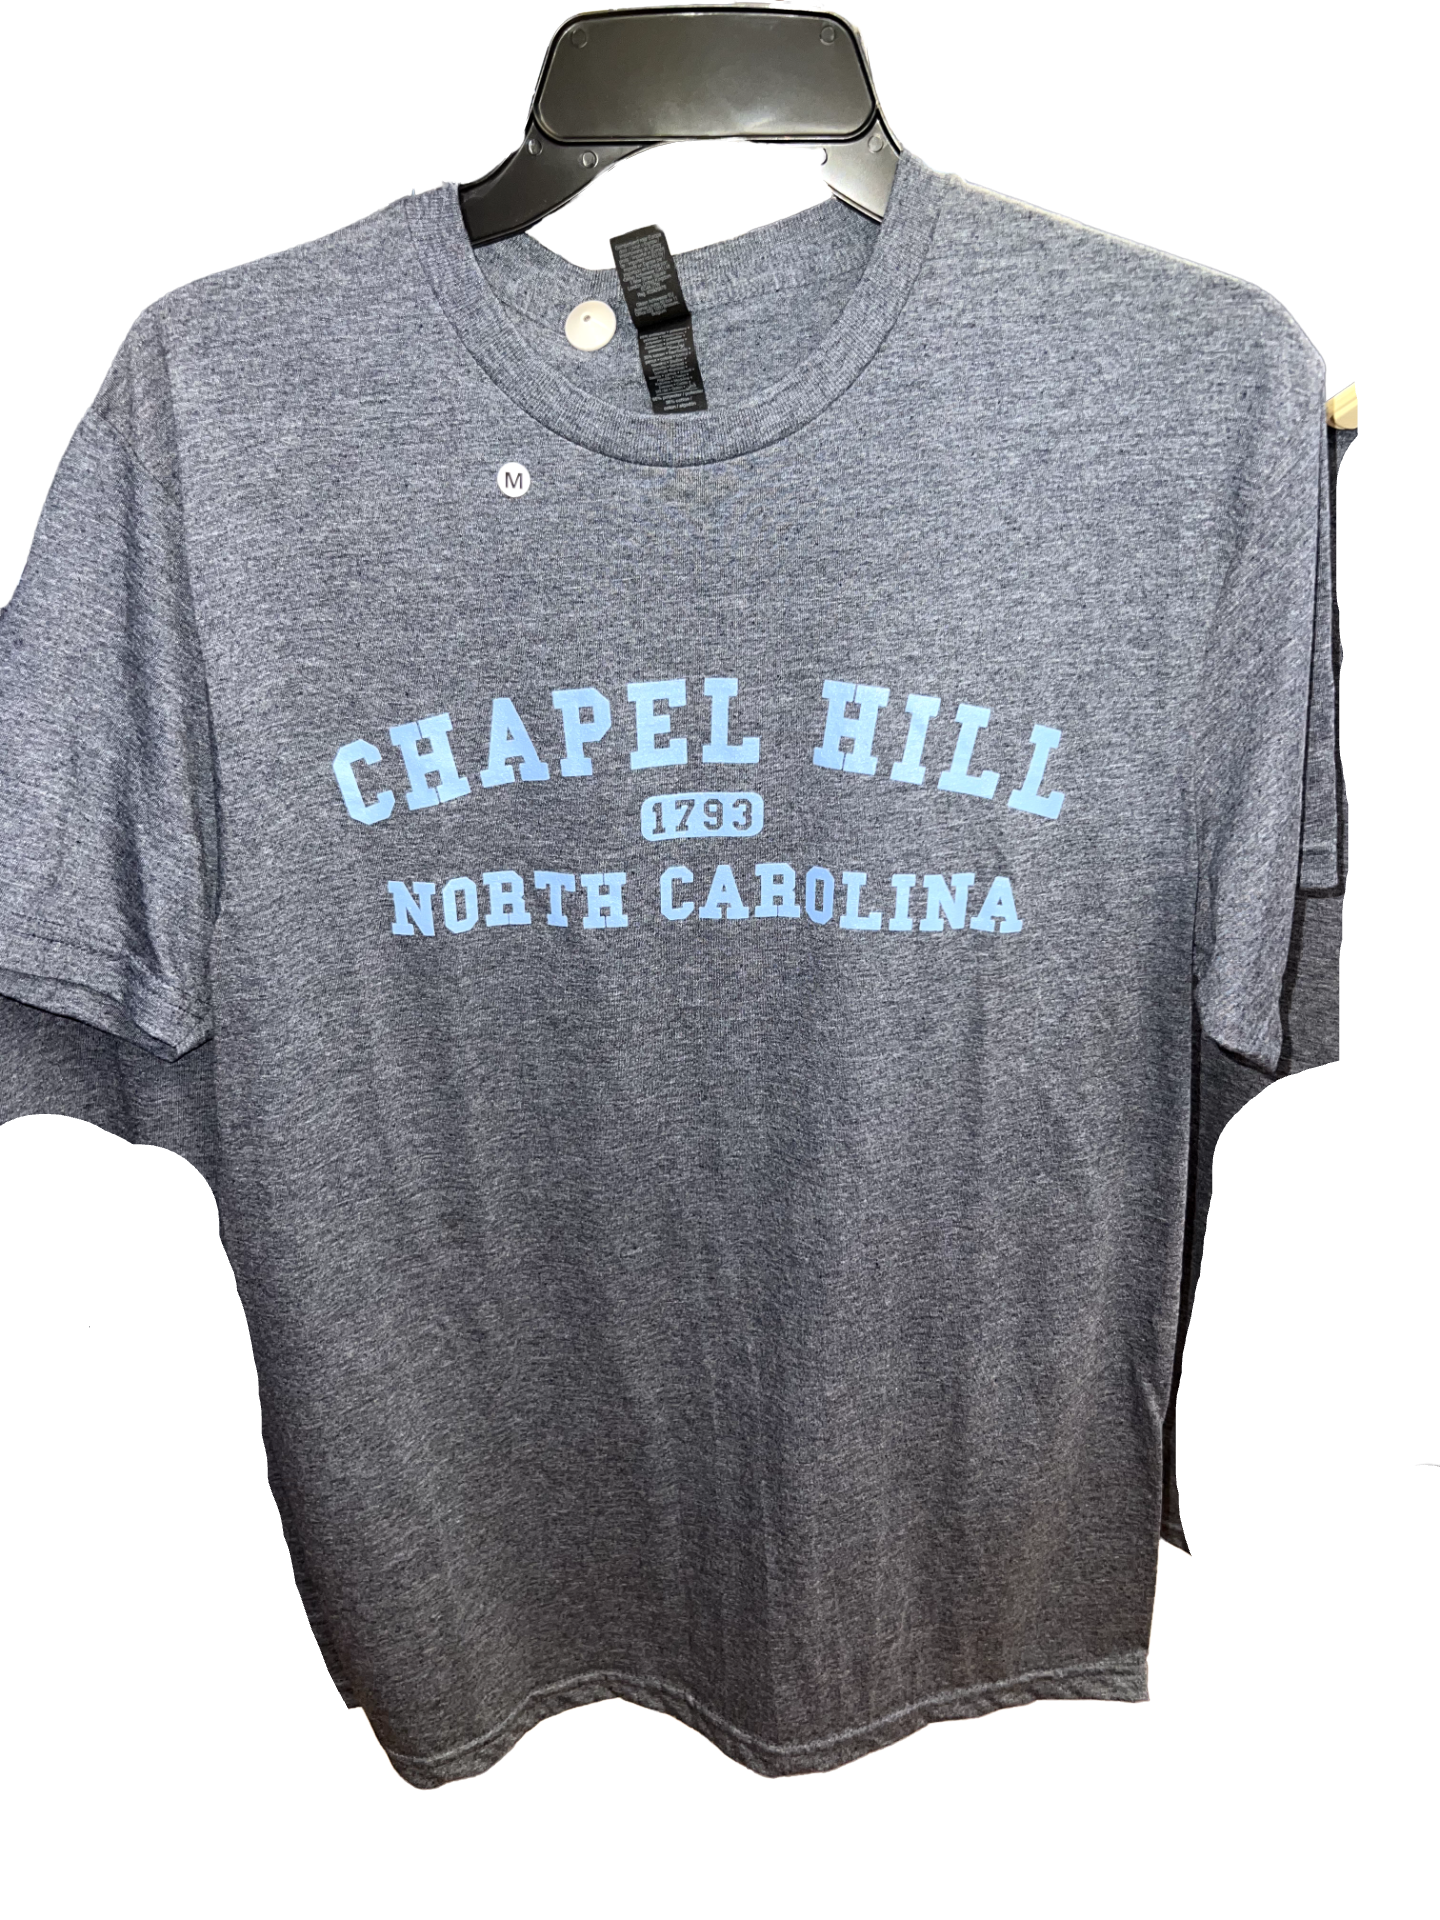 Chapel Hill 1793 North Carolina T-Shirt